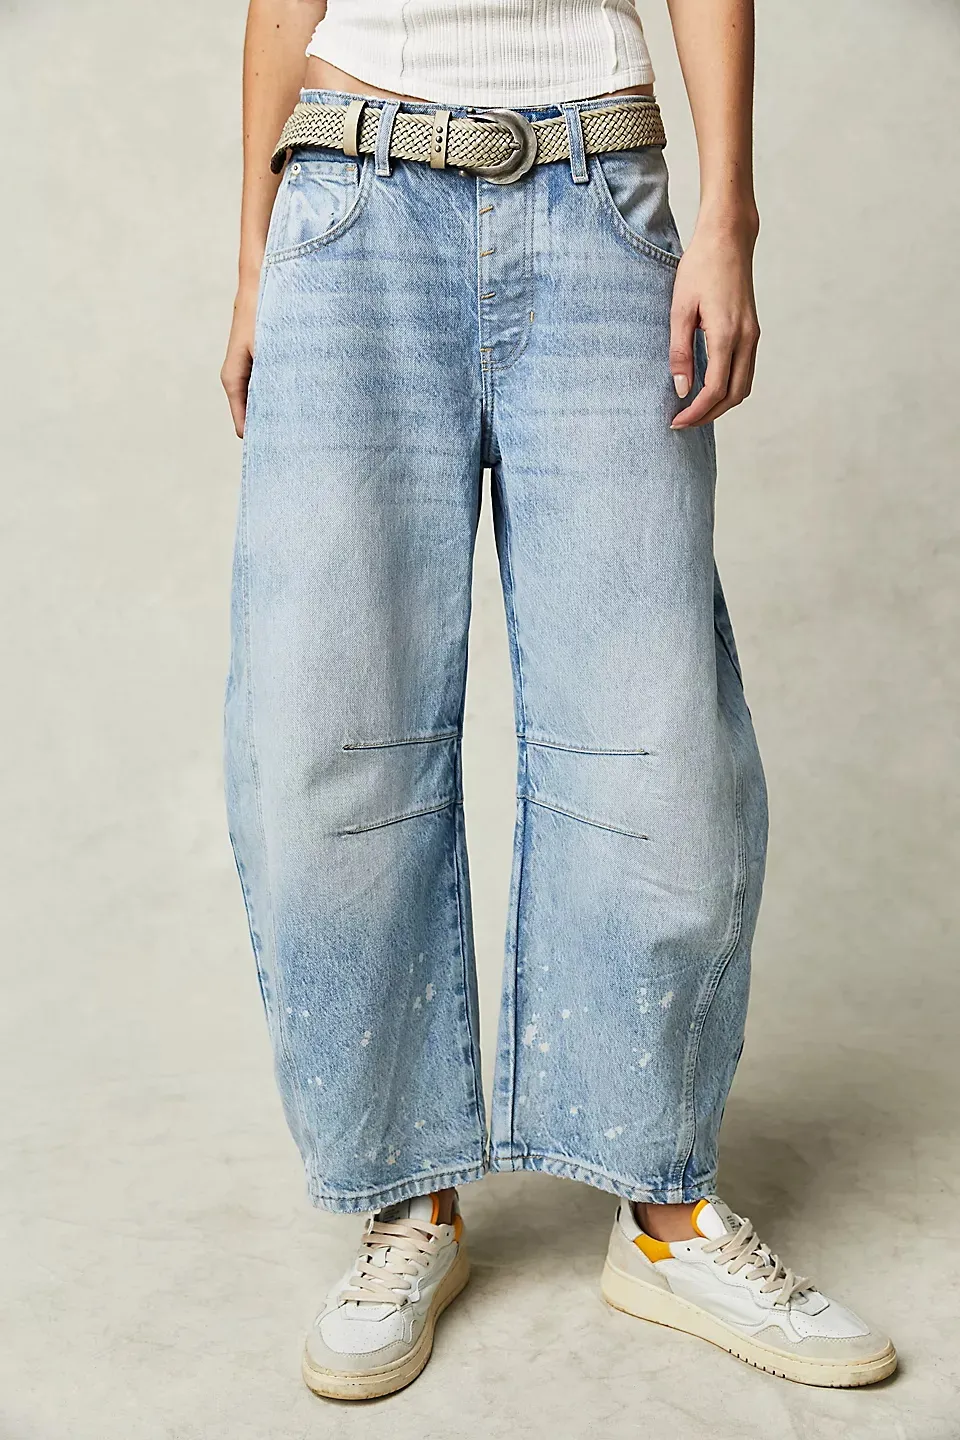 High Stretch Mid-Rise Barrel Jeans Fashion wide Leg Shape(Buy 2 Free Shipping)